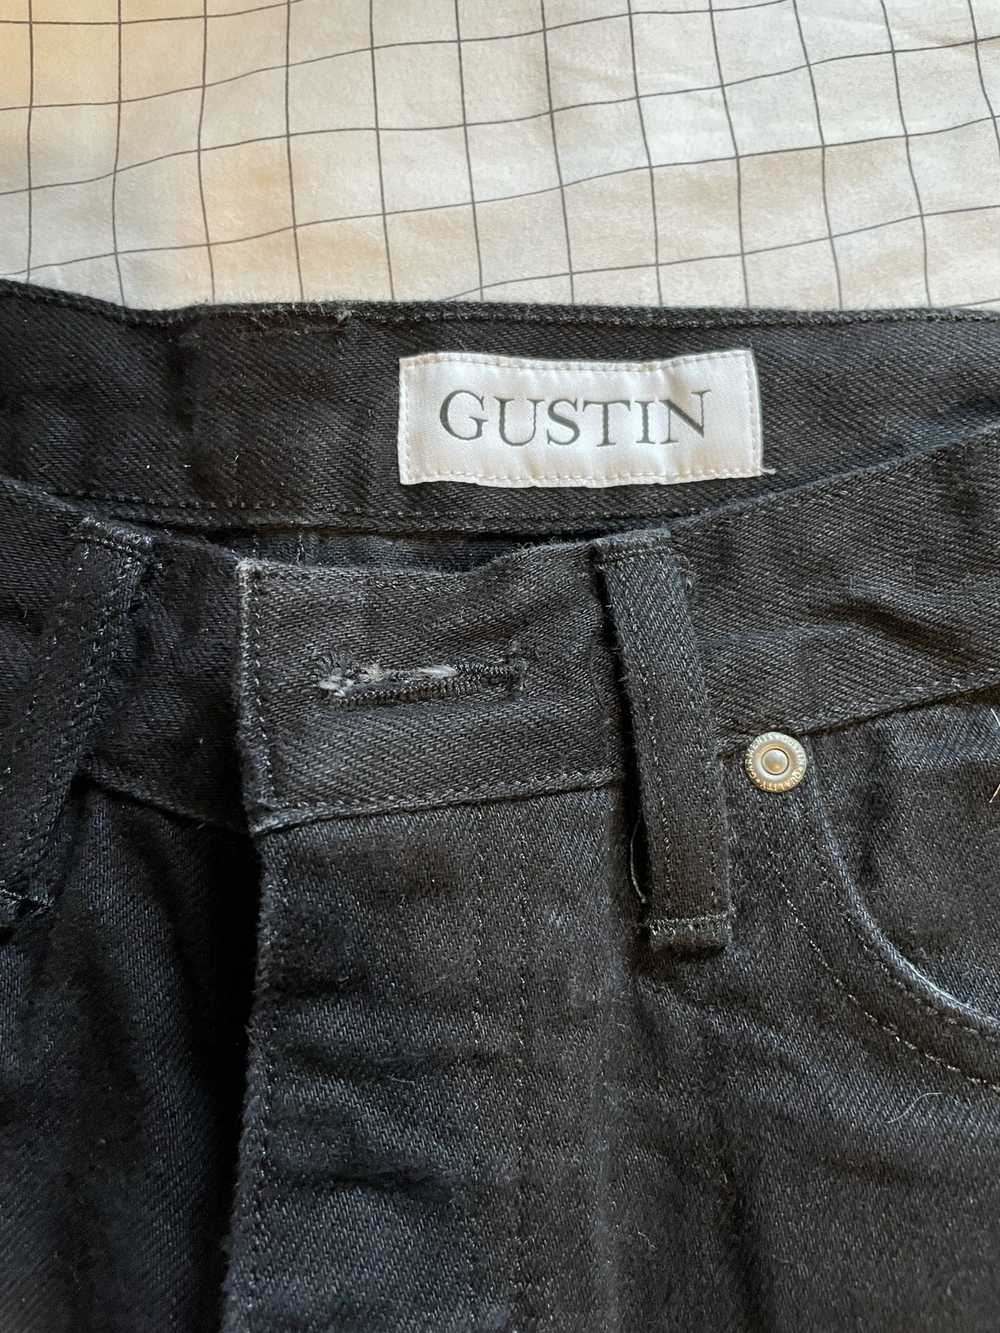 Gustin #99 Japan BlackXBlack Gustin Jeans - image 2